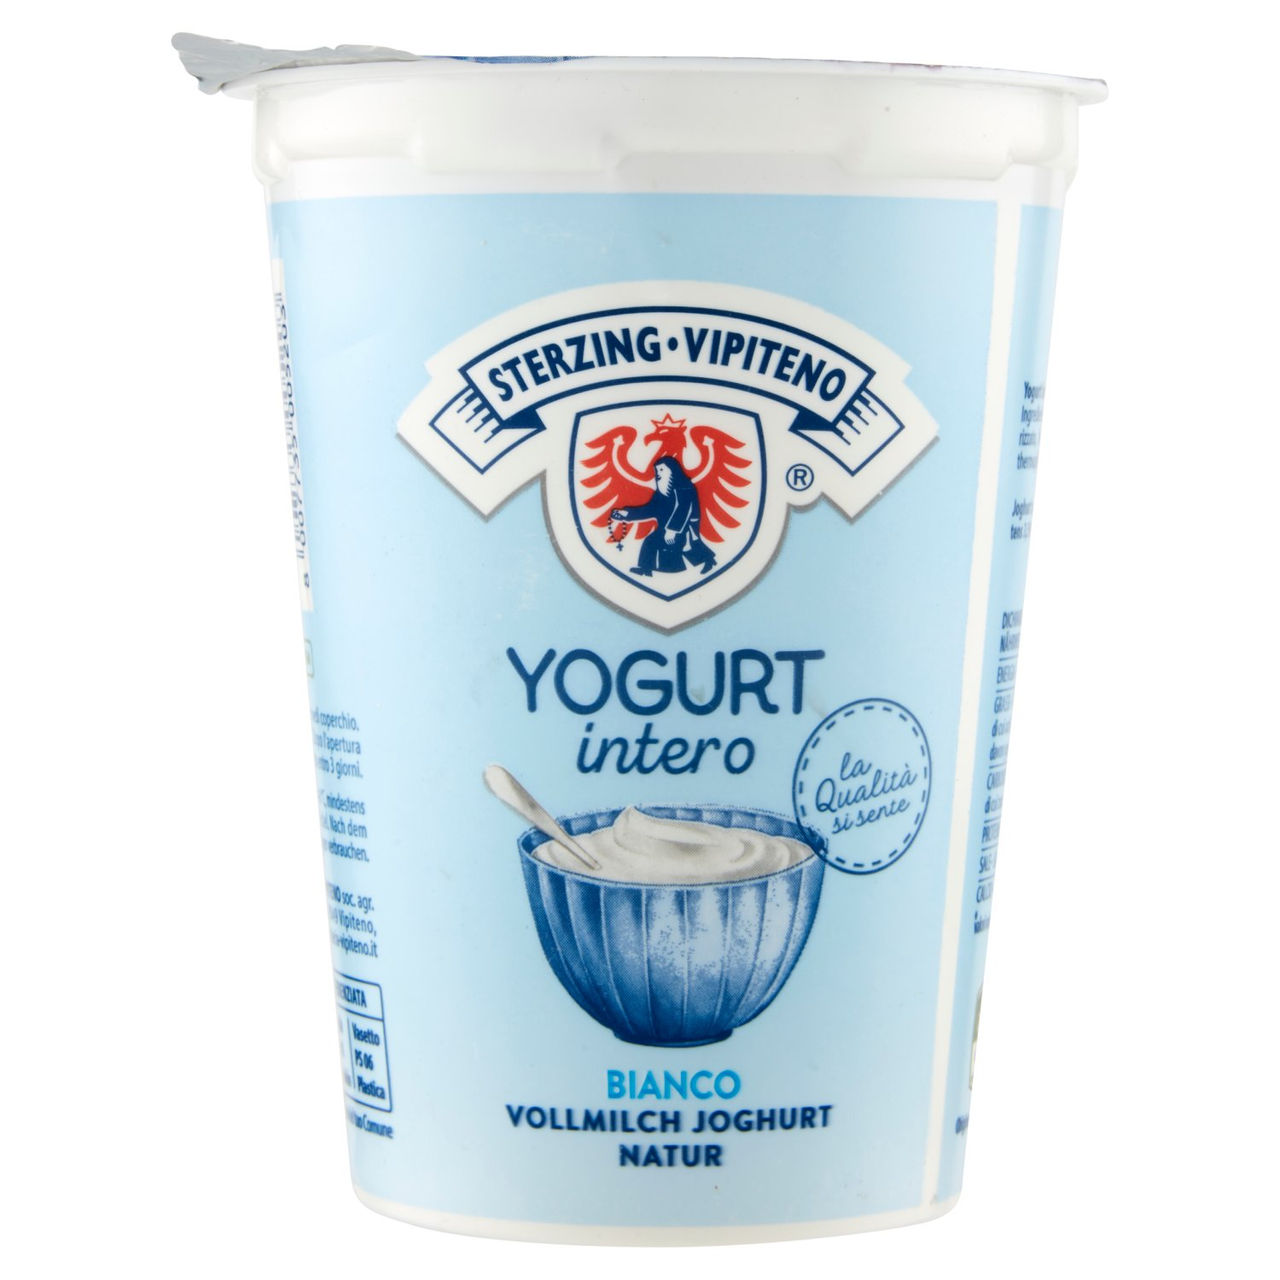 Sterzing Vipiteno Yogurt Intero Bianco 500 g